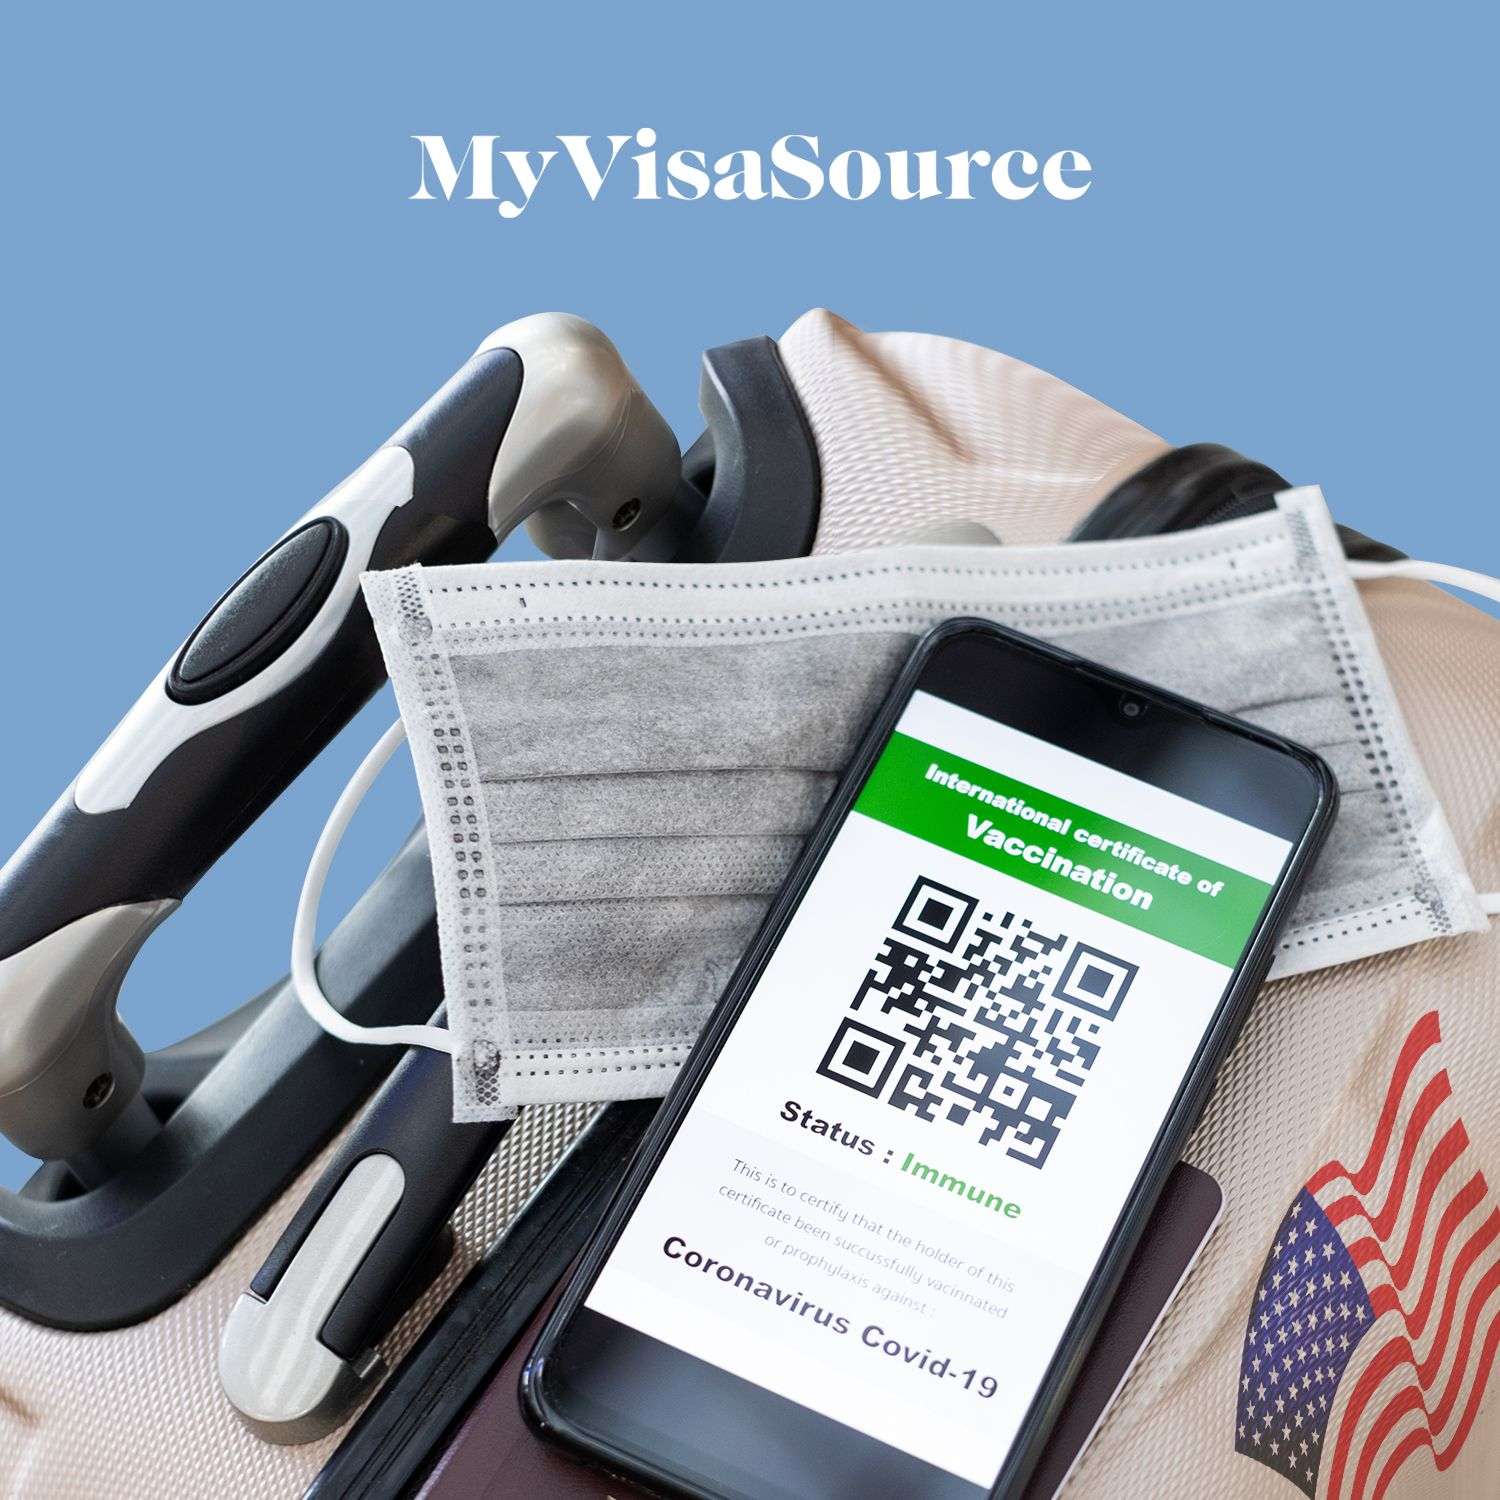 vaccine passport app on cellphone on top of luggage my visa source